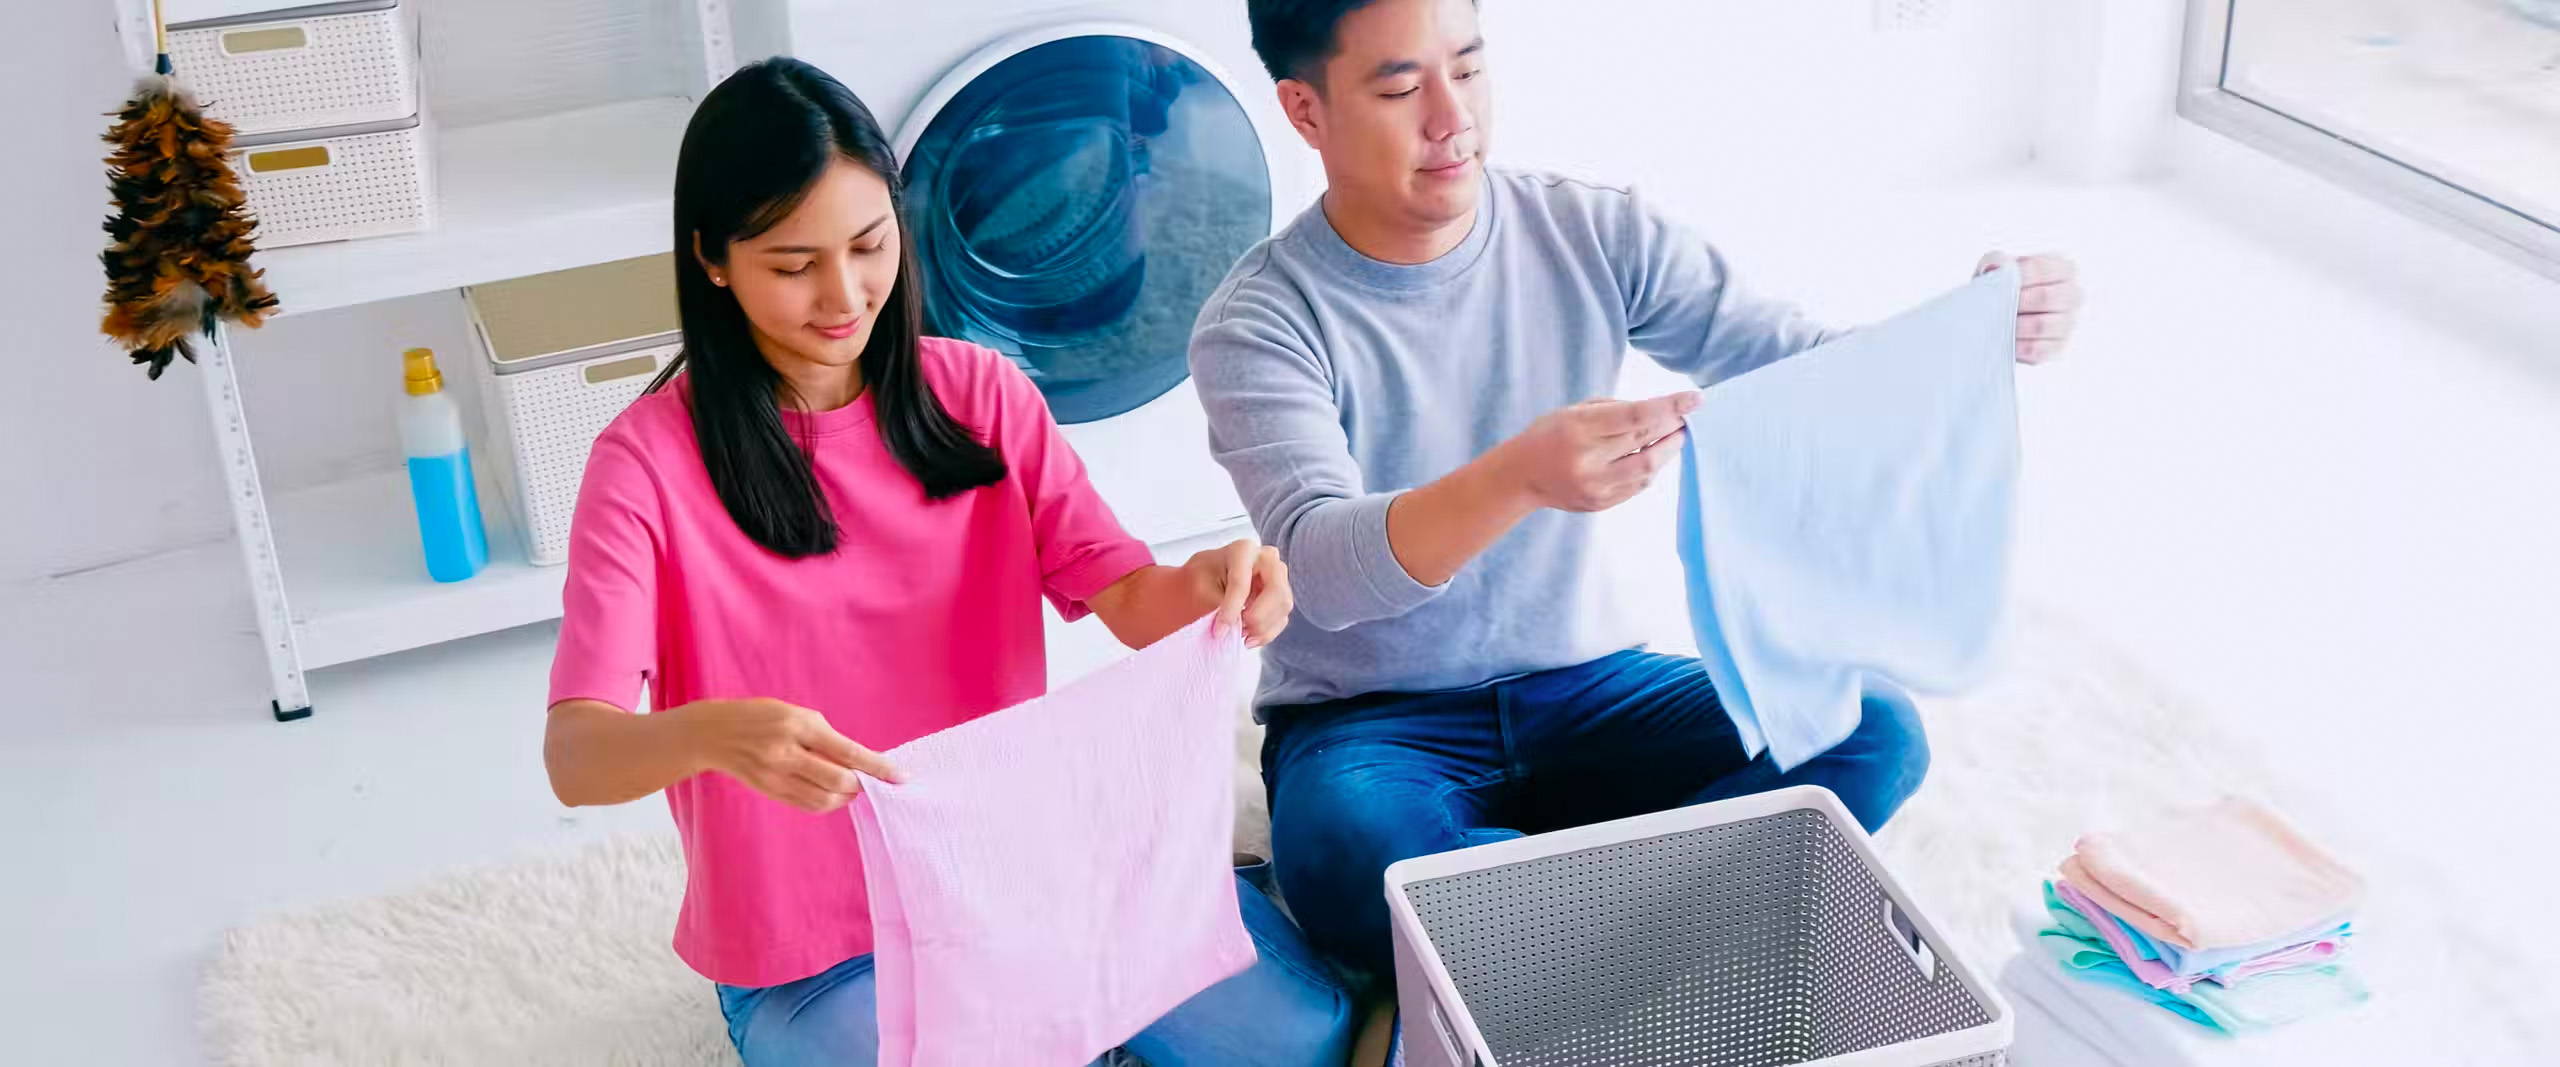 Woman and man folding laundry